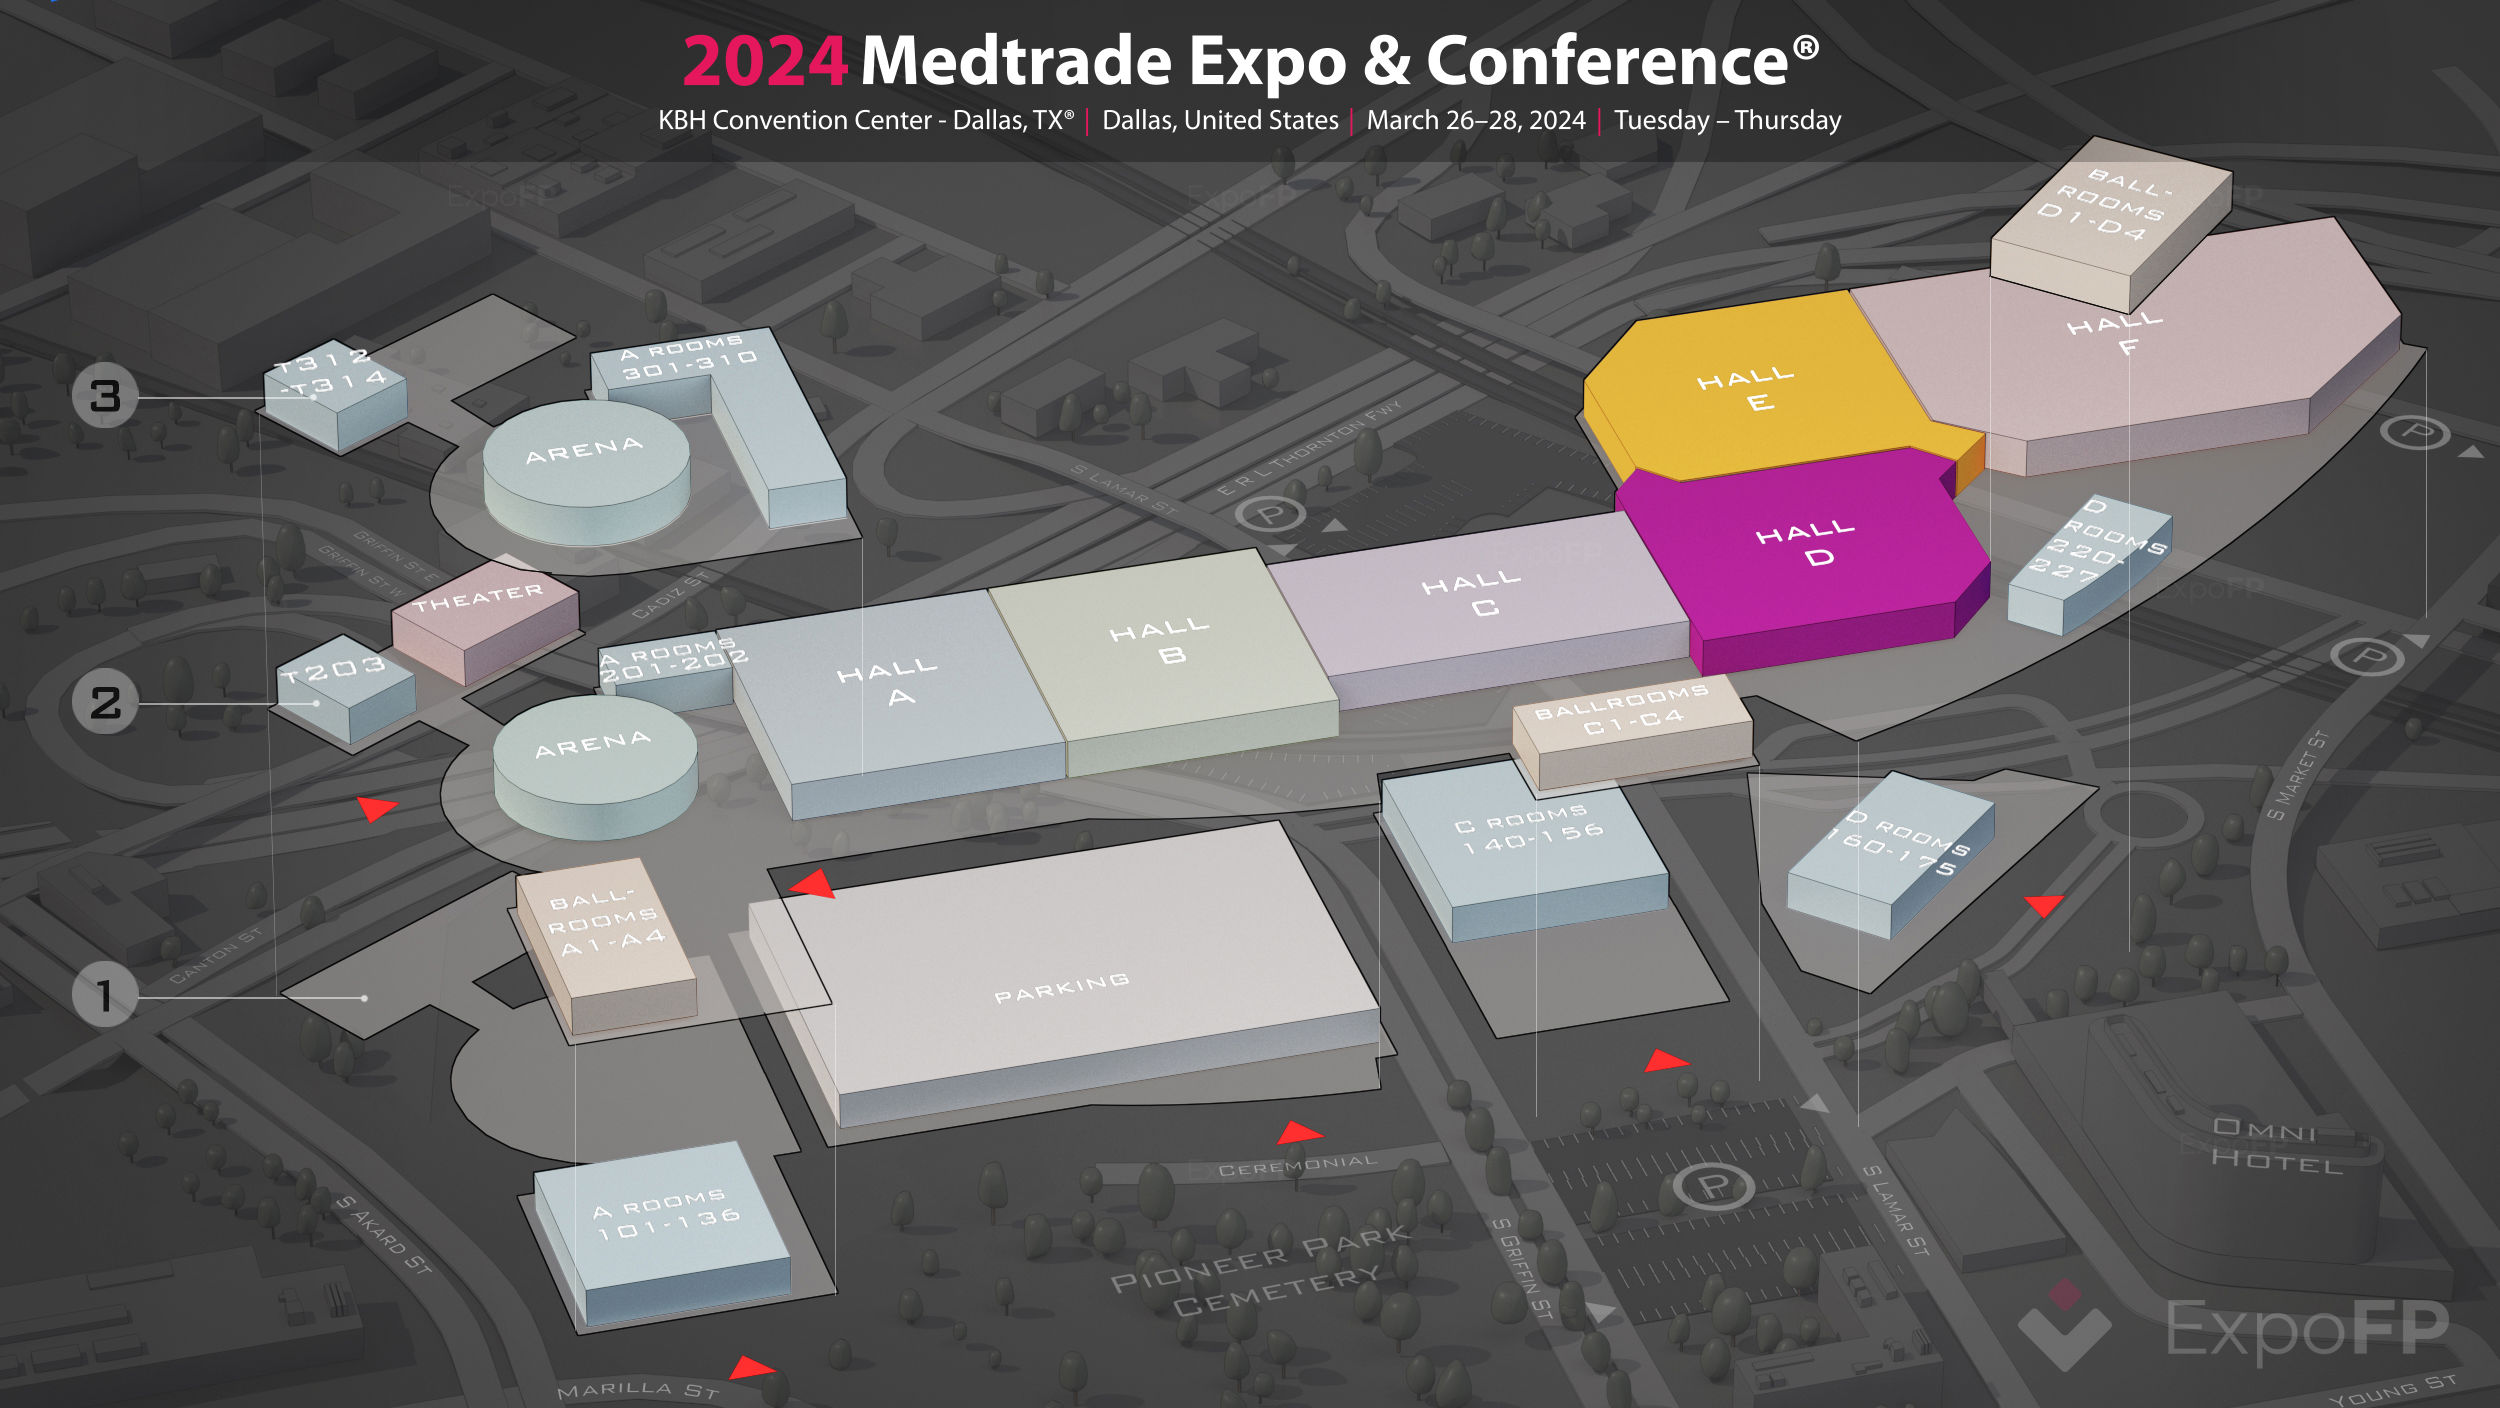 Medtrade Expo & Conference 2024 in KBH Convention Center Dallas, TX